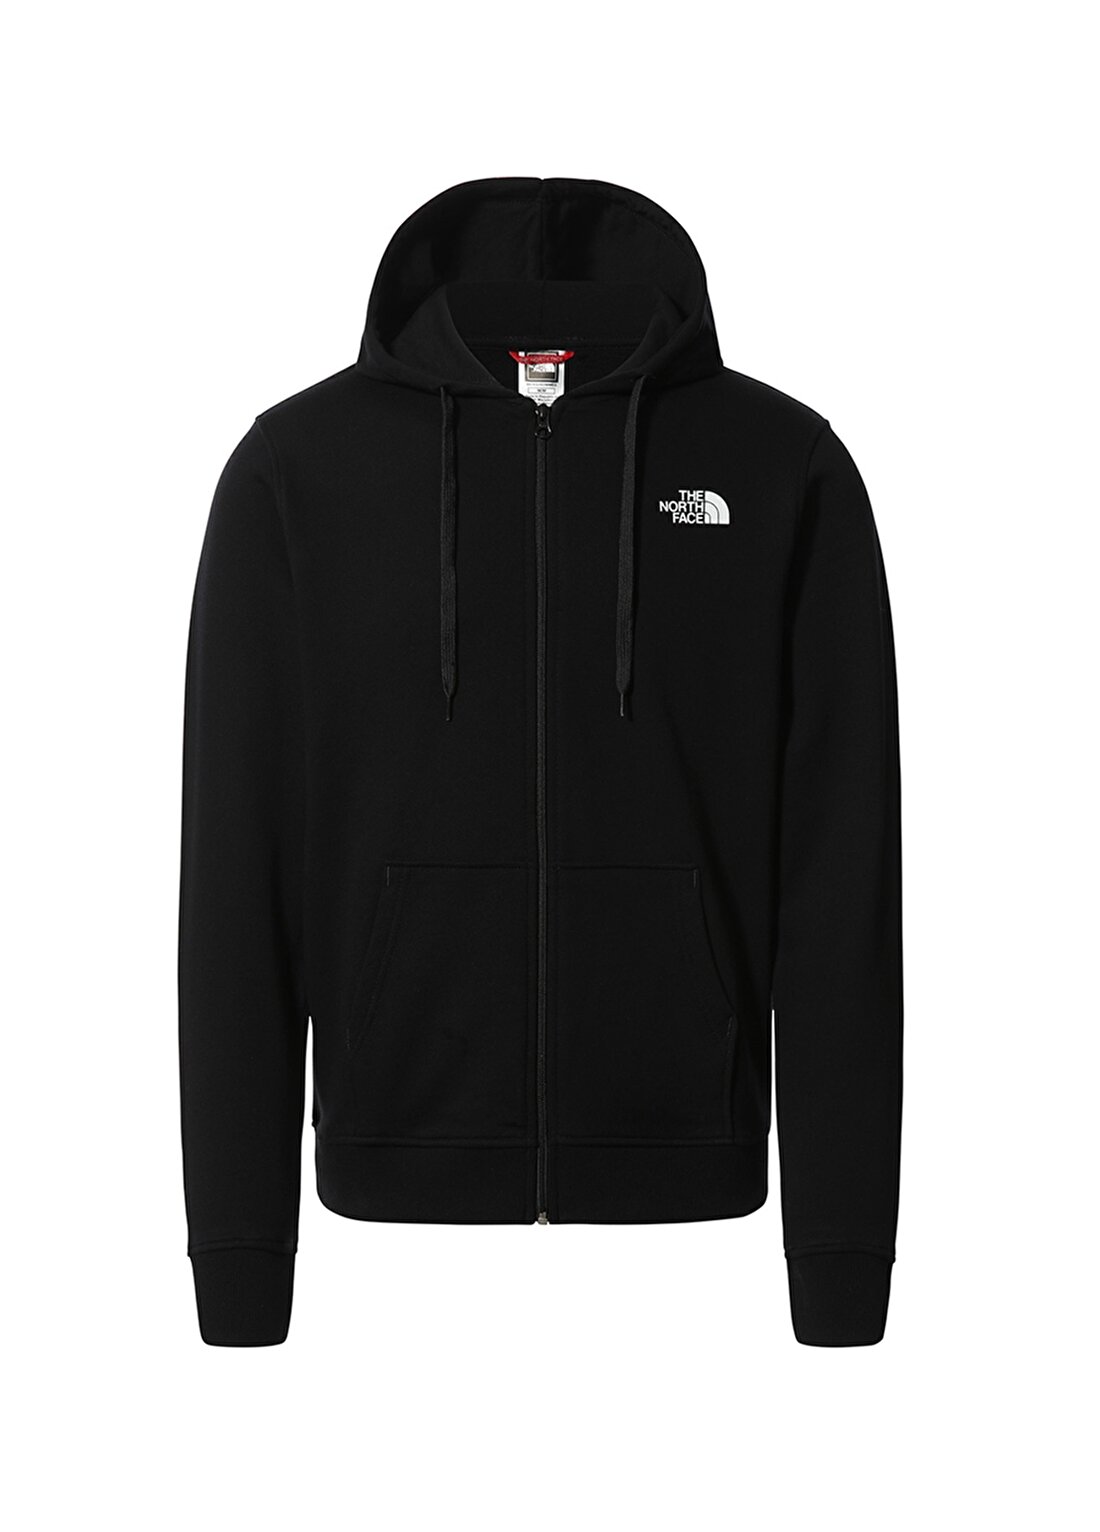 The North Face Kapüşonlu Düz Siyah Erkek Sweatshirt - NF0A7R4PJK31 M Biner Graphic Hoodie